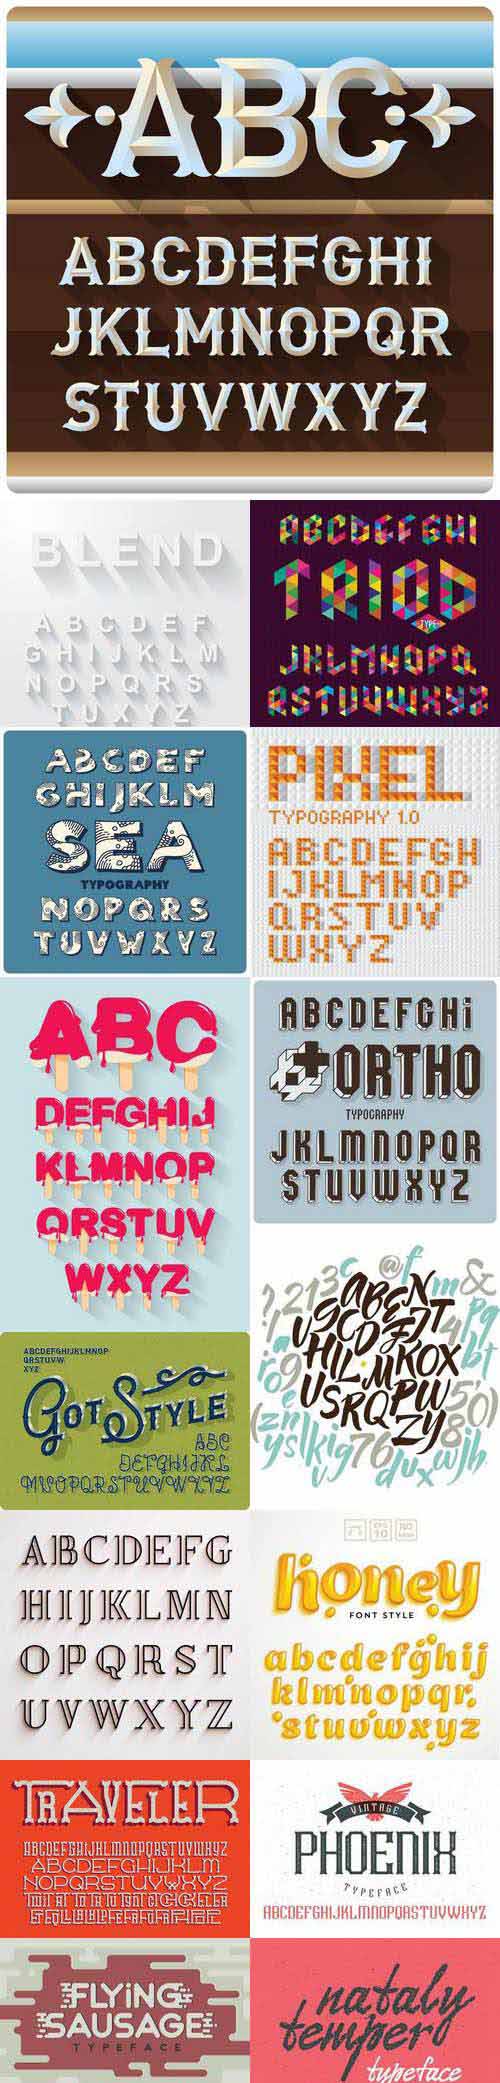 Typeface Illustration Vector Set 3